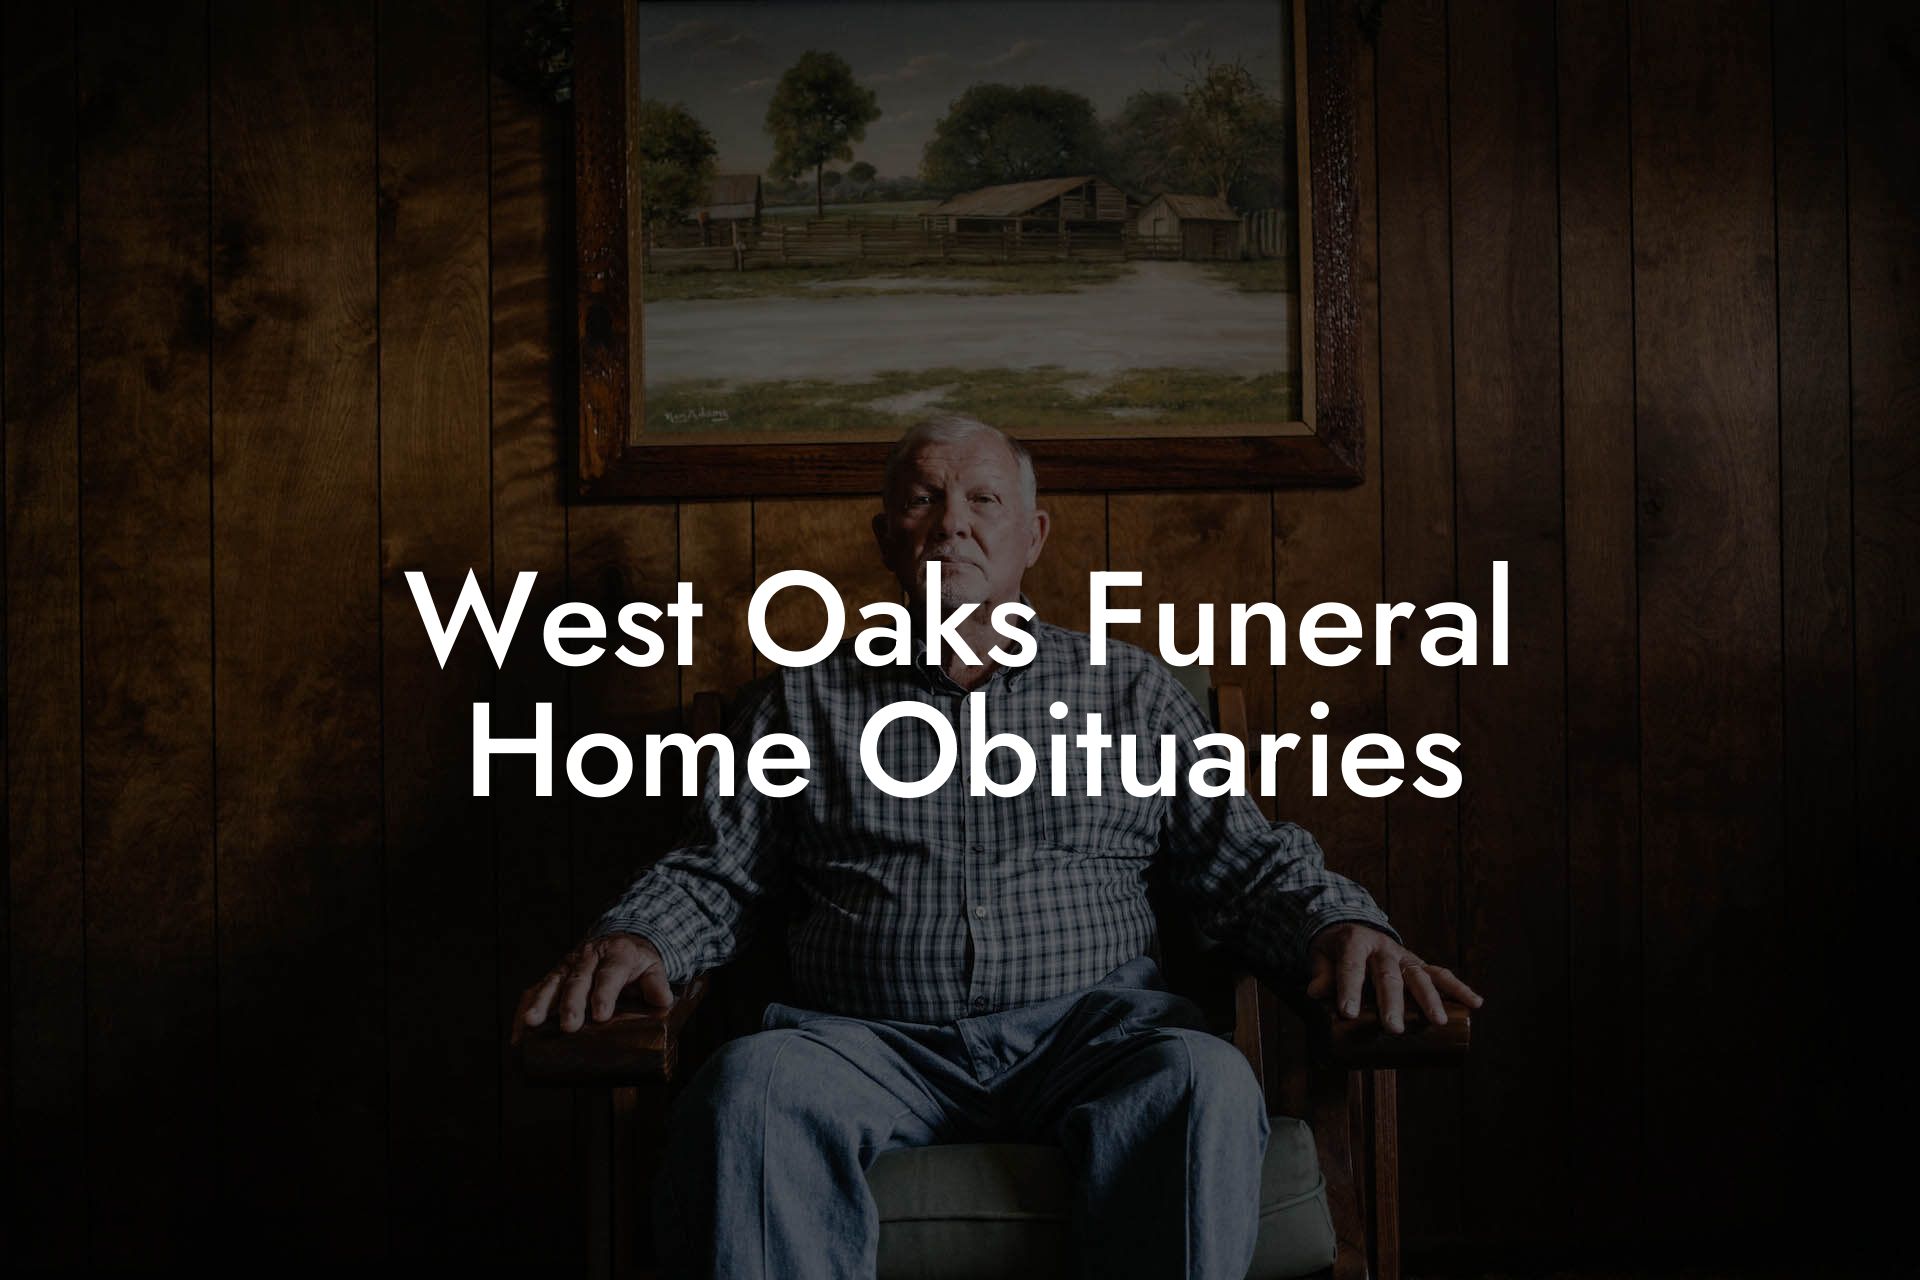 West Oaks Funeral Home Obituaries